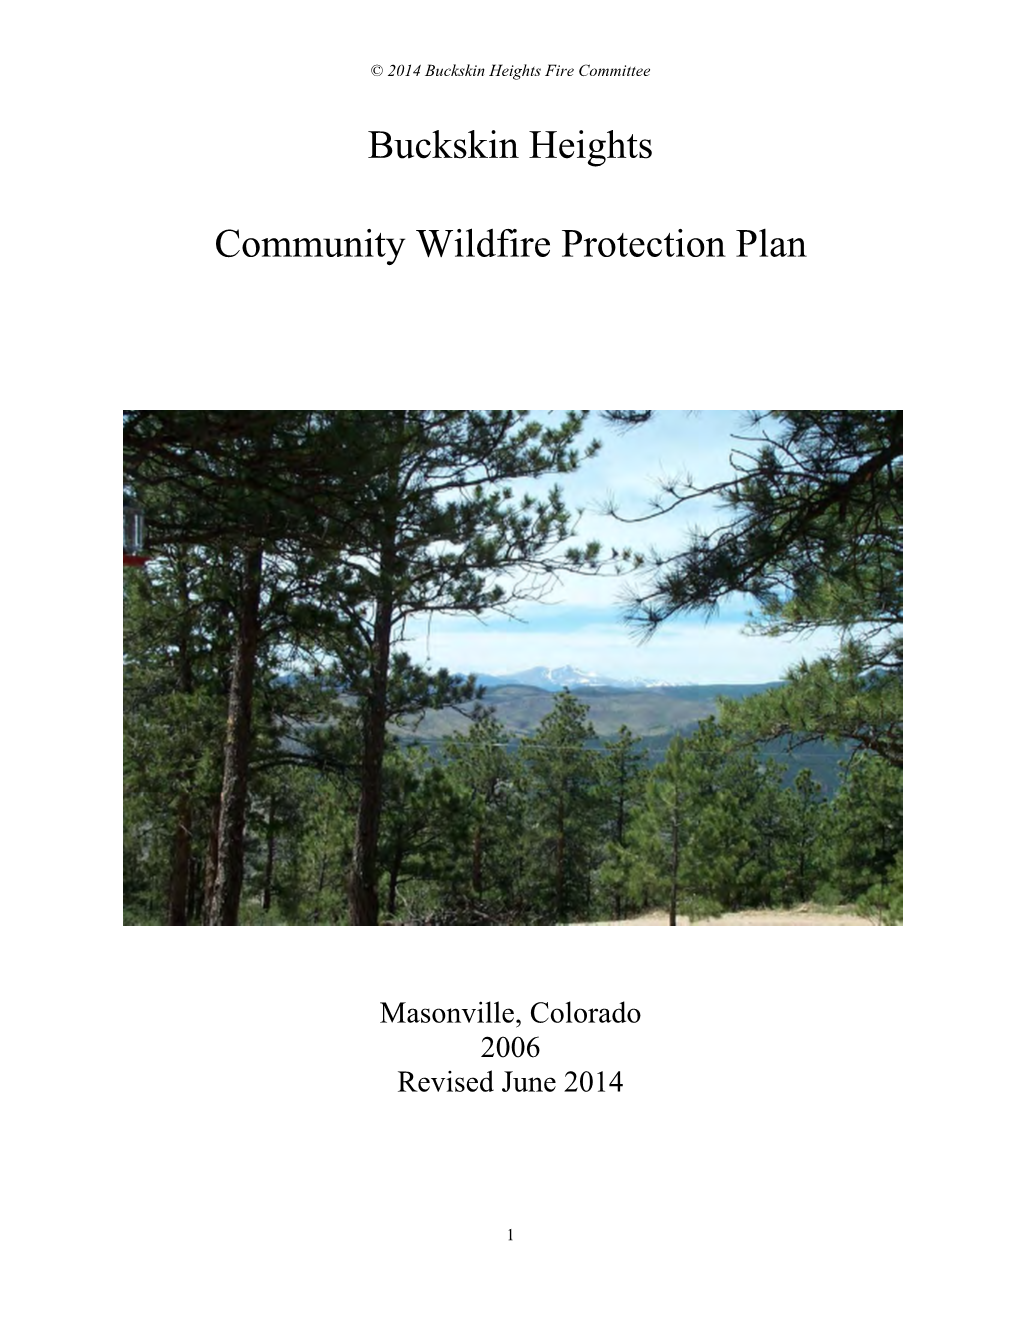 Buckskin Heights Community Wildfire Protection Plan